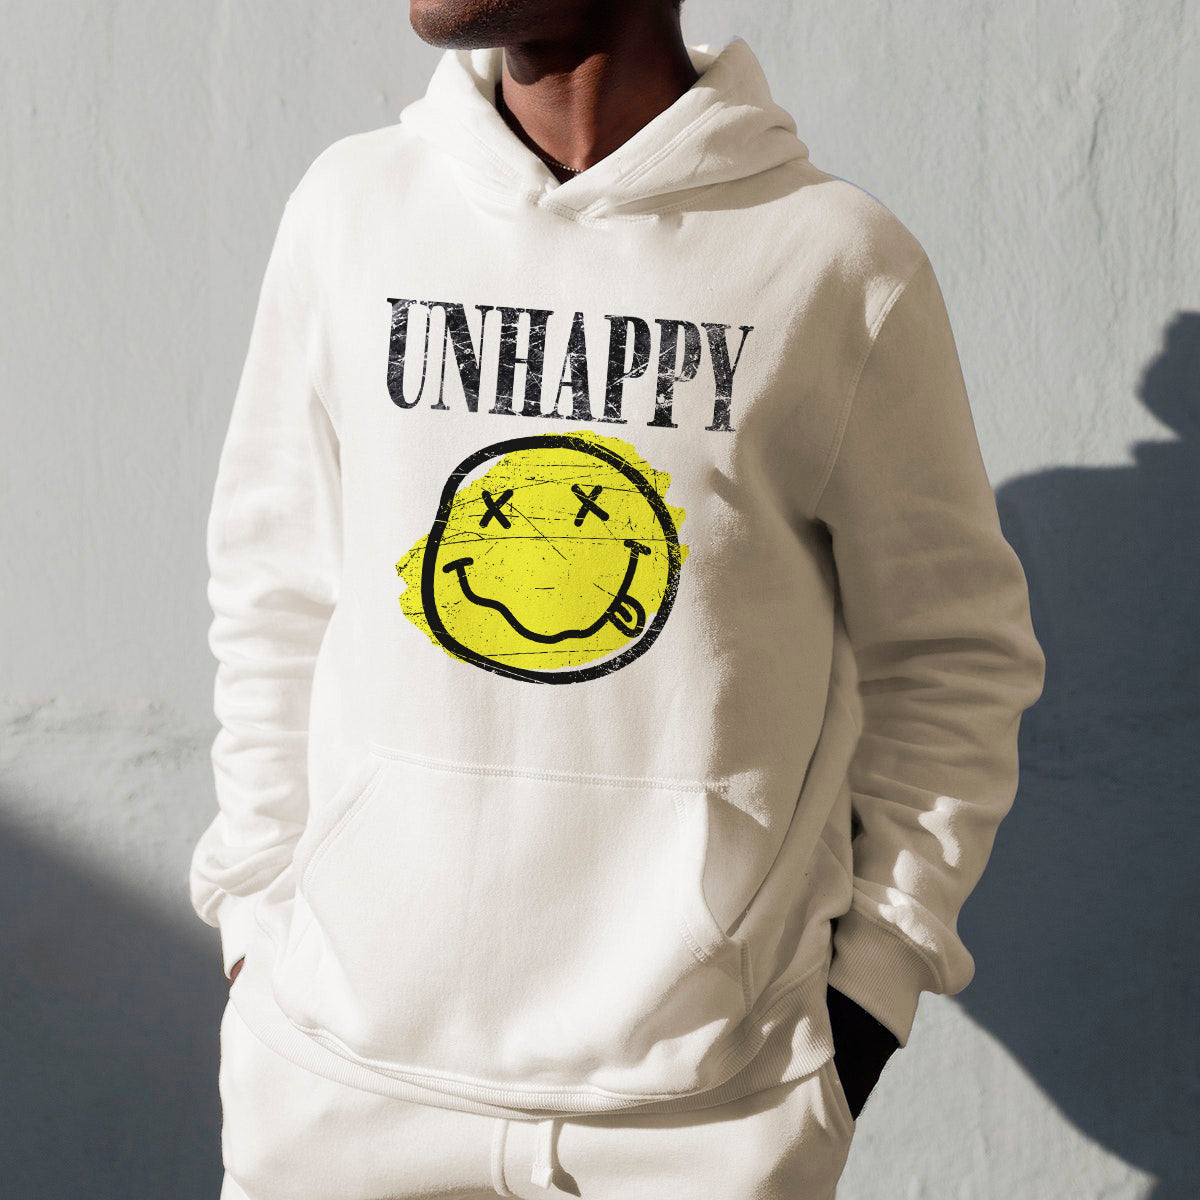 <img src=“shopnova hoodie.png” alt=“unhappy face graphic print by shopnova”>